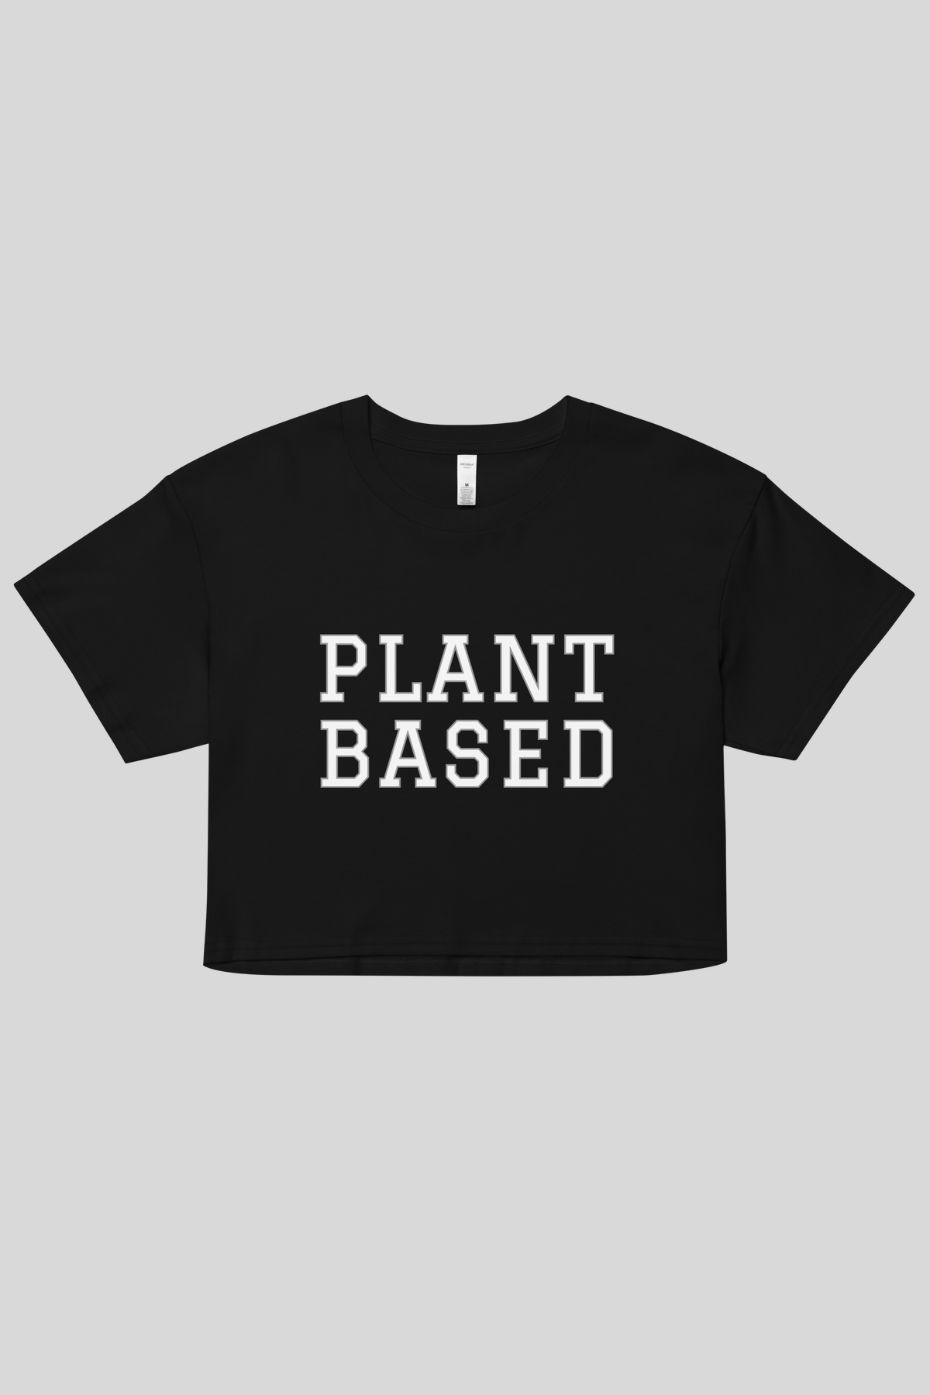 Plant Based - Women’s crop top